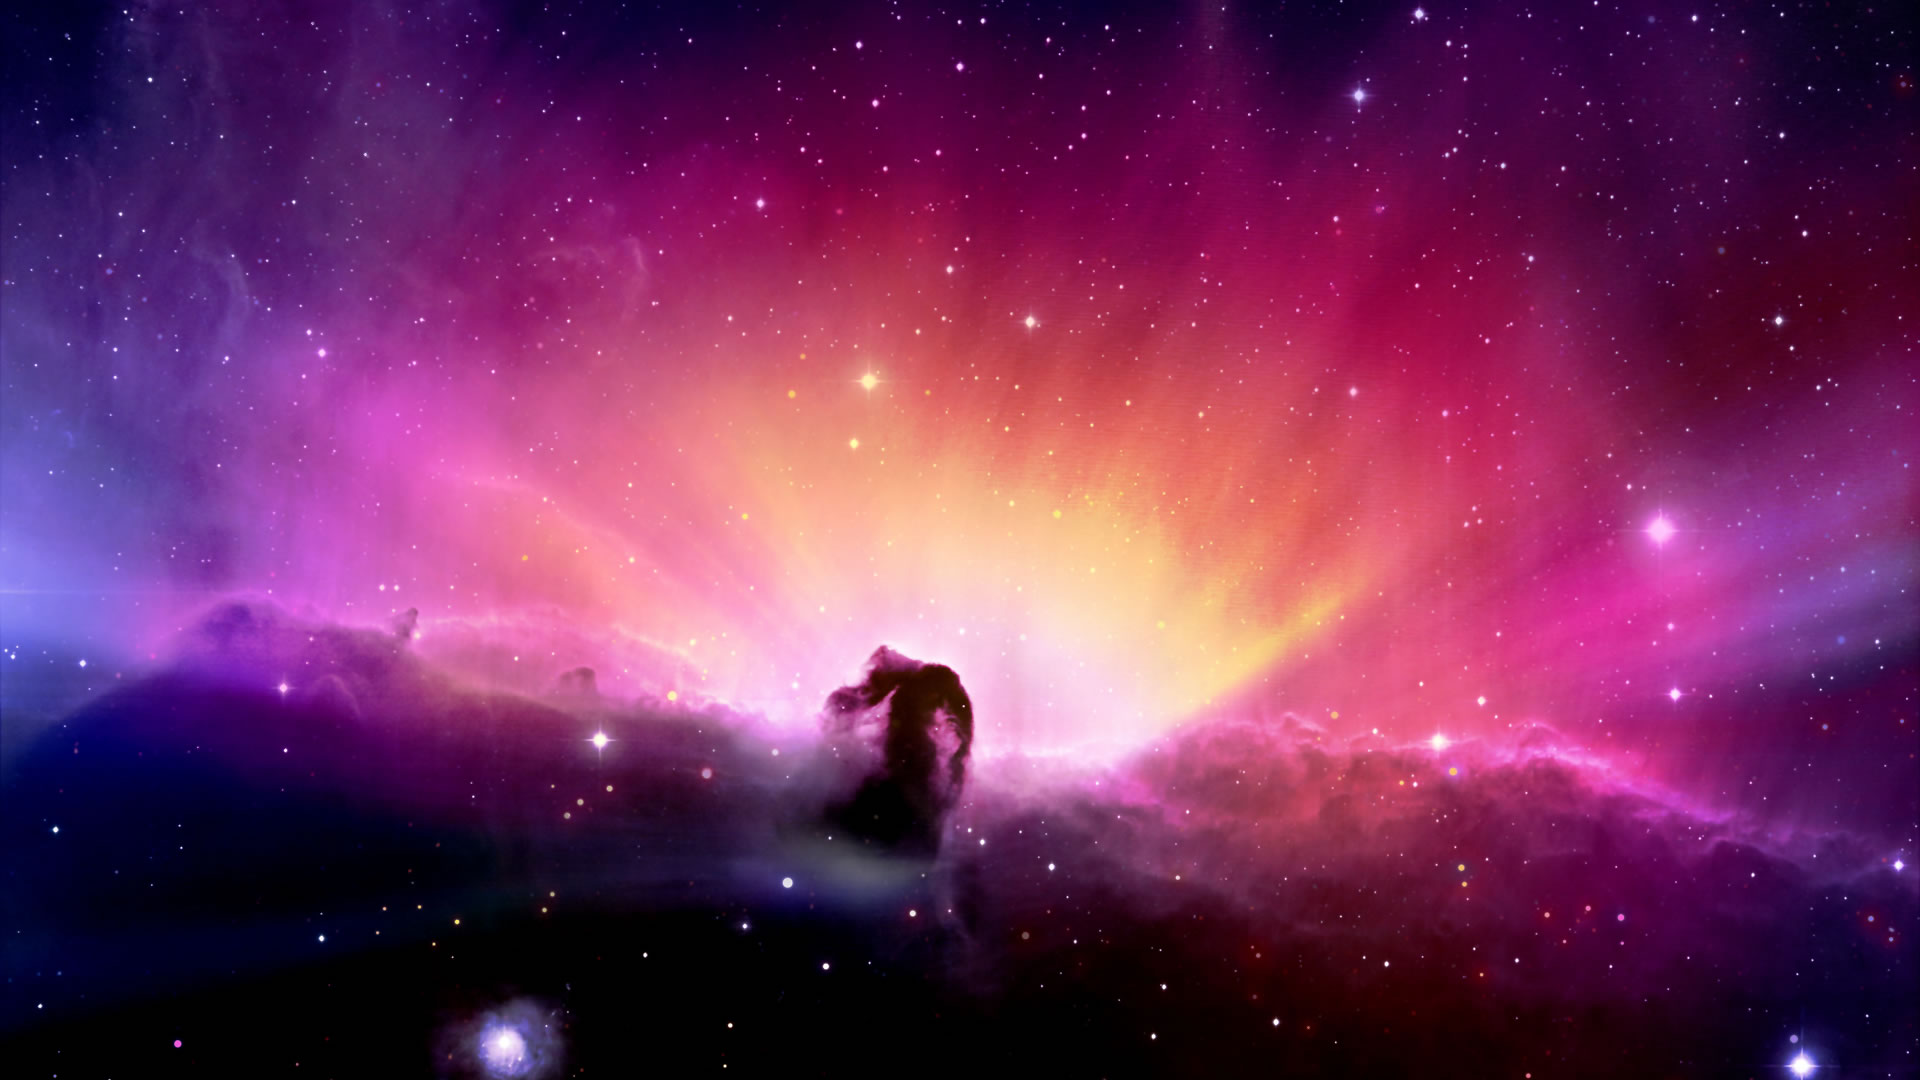 macスペース壁紙,星雲,雰囲気,空,紫の,バイオレット